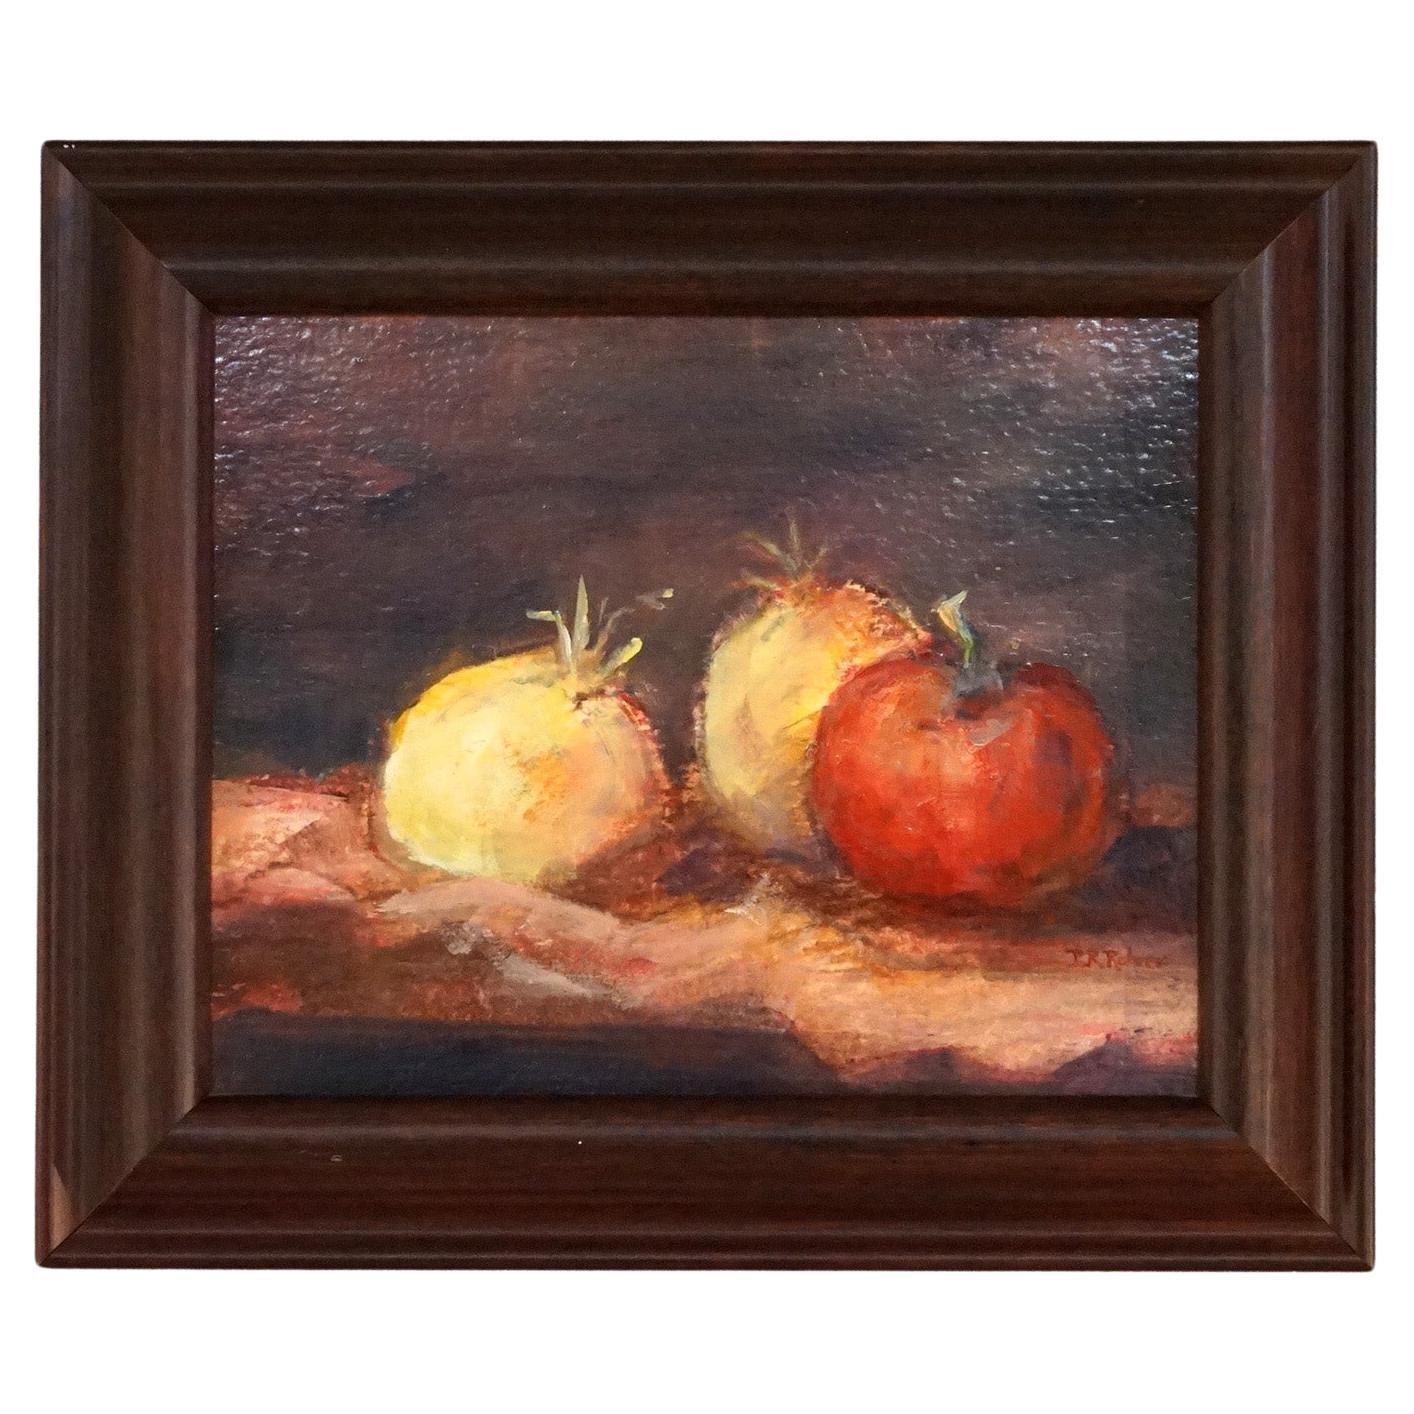 Fruit Still Life Oil on Panel Painting  “Tutti Frutti” Signed P R Rohrer 20th C